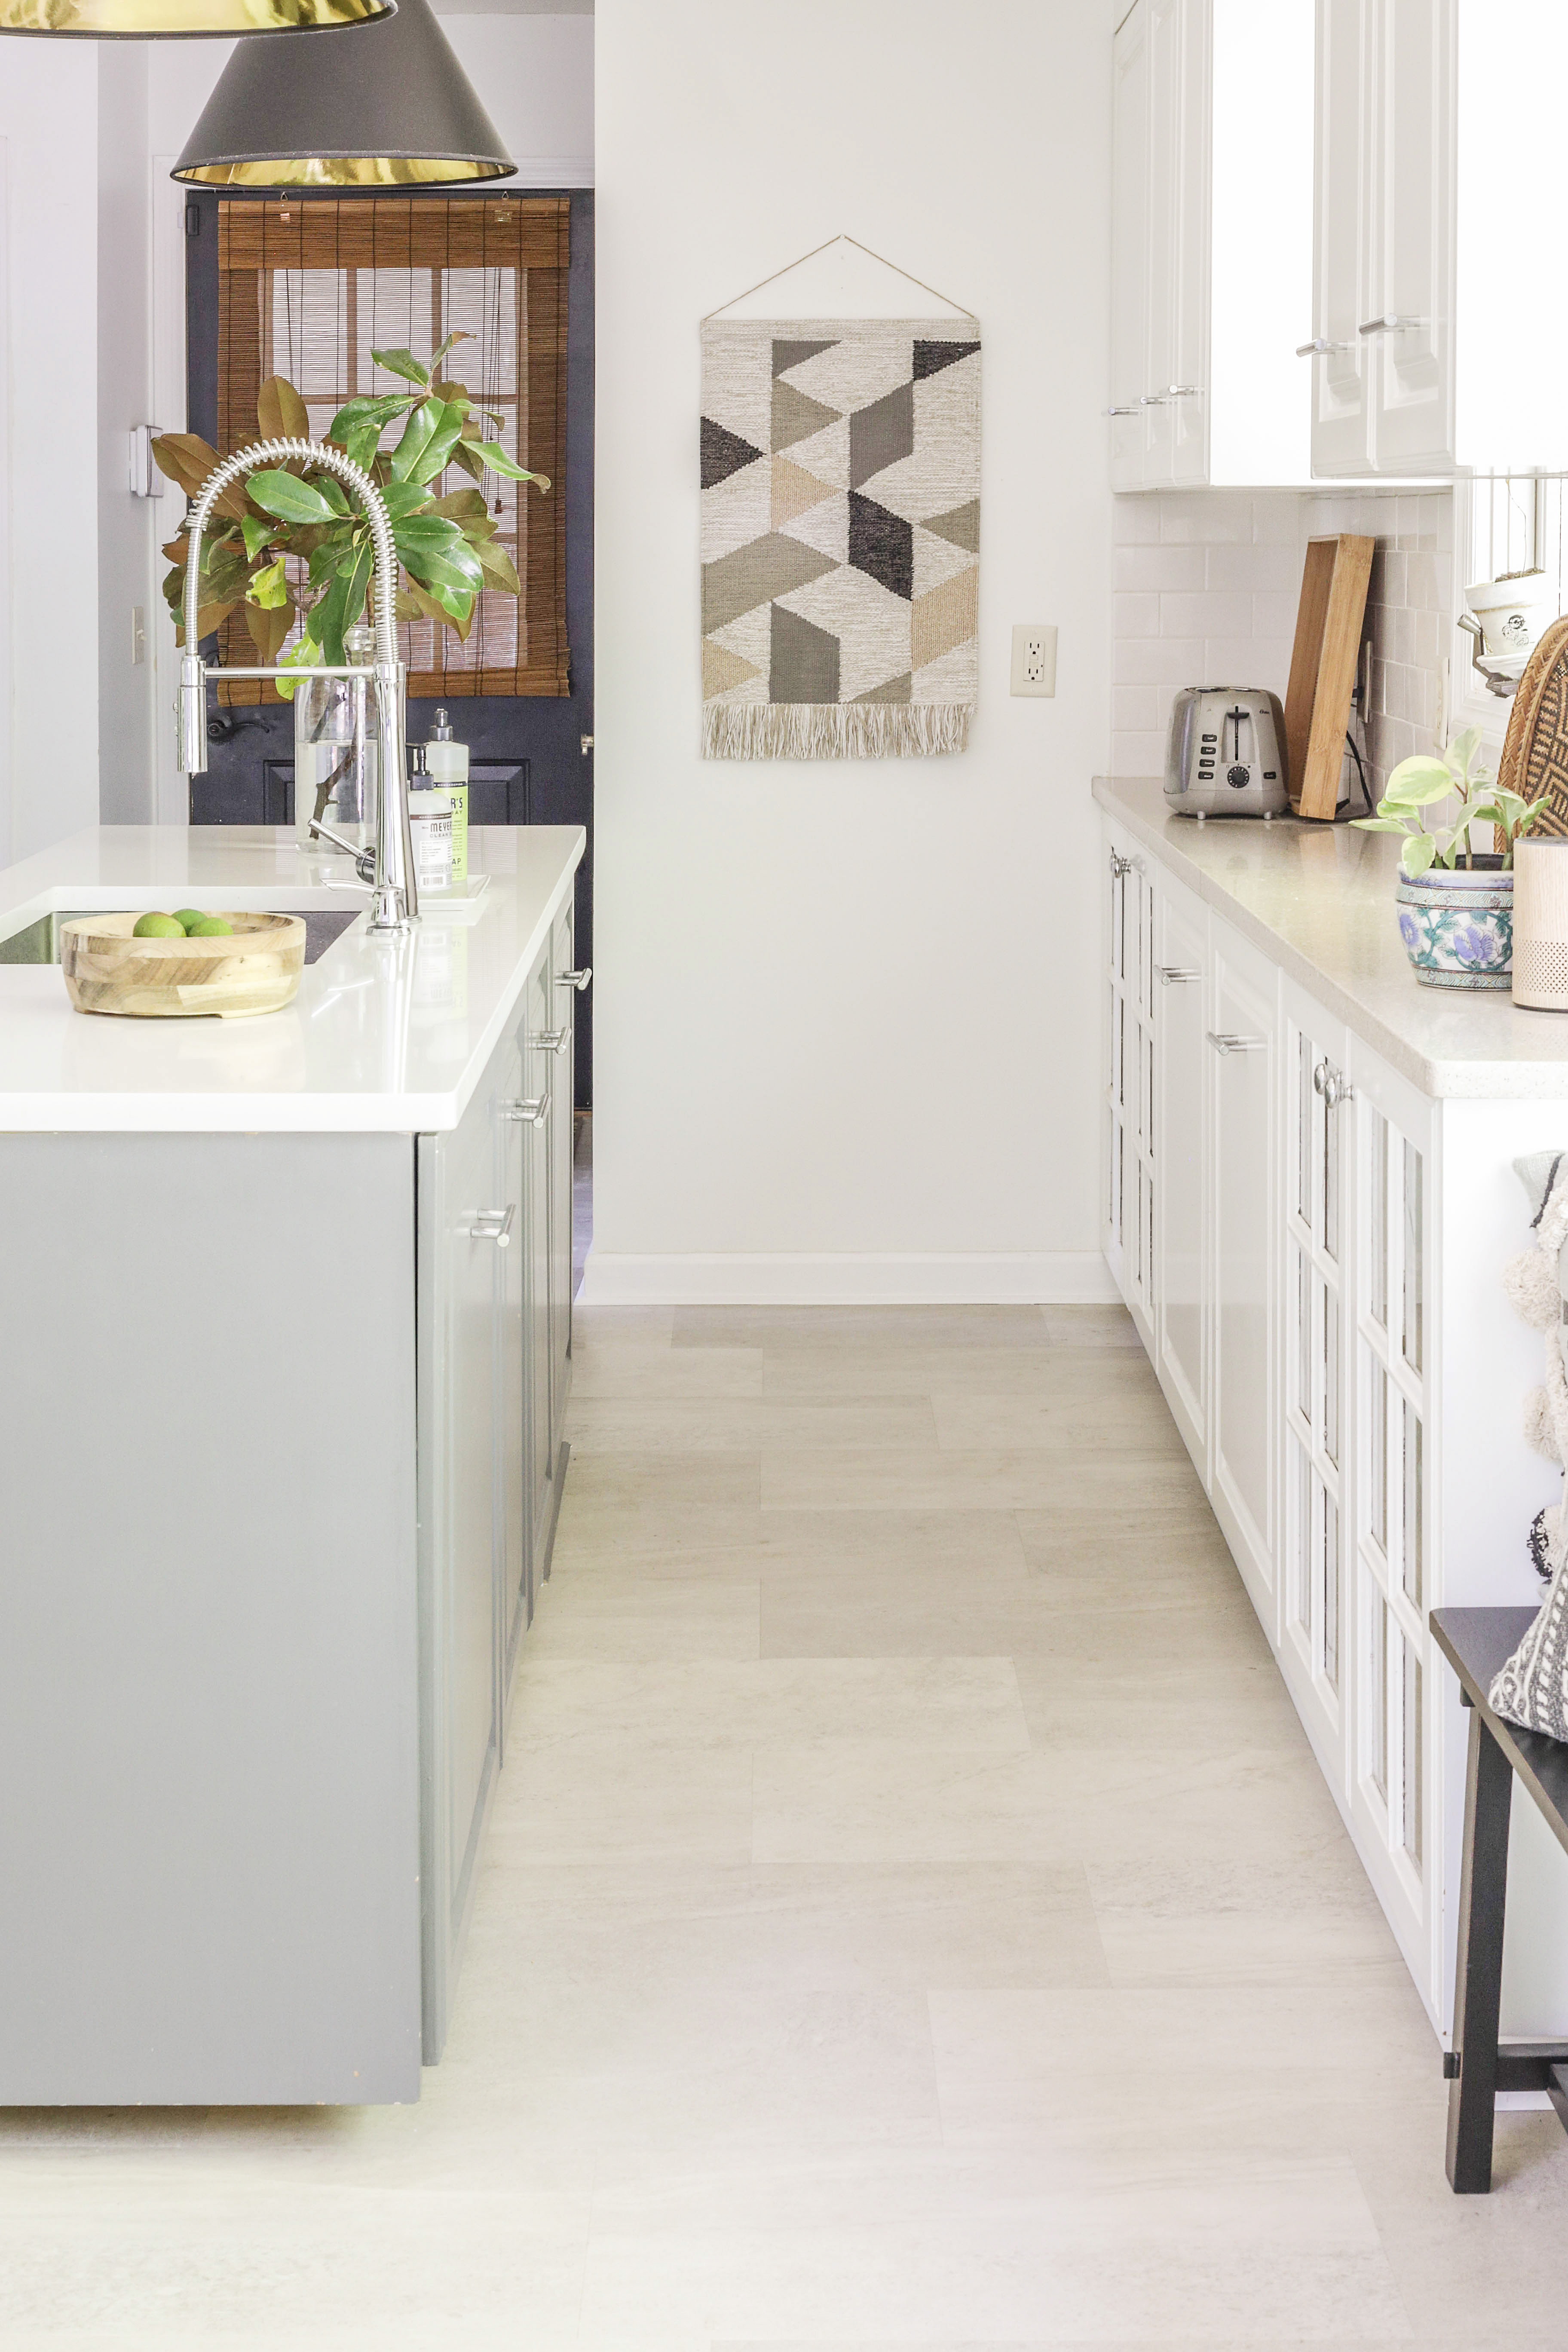 Luxury Vinyl Tile Over Existing, Floating Kitchen Floor Tiles